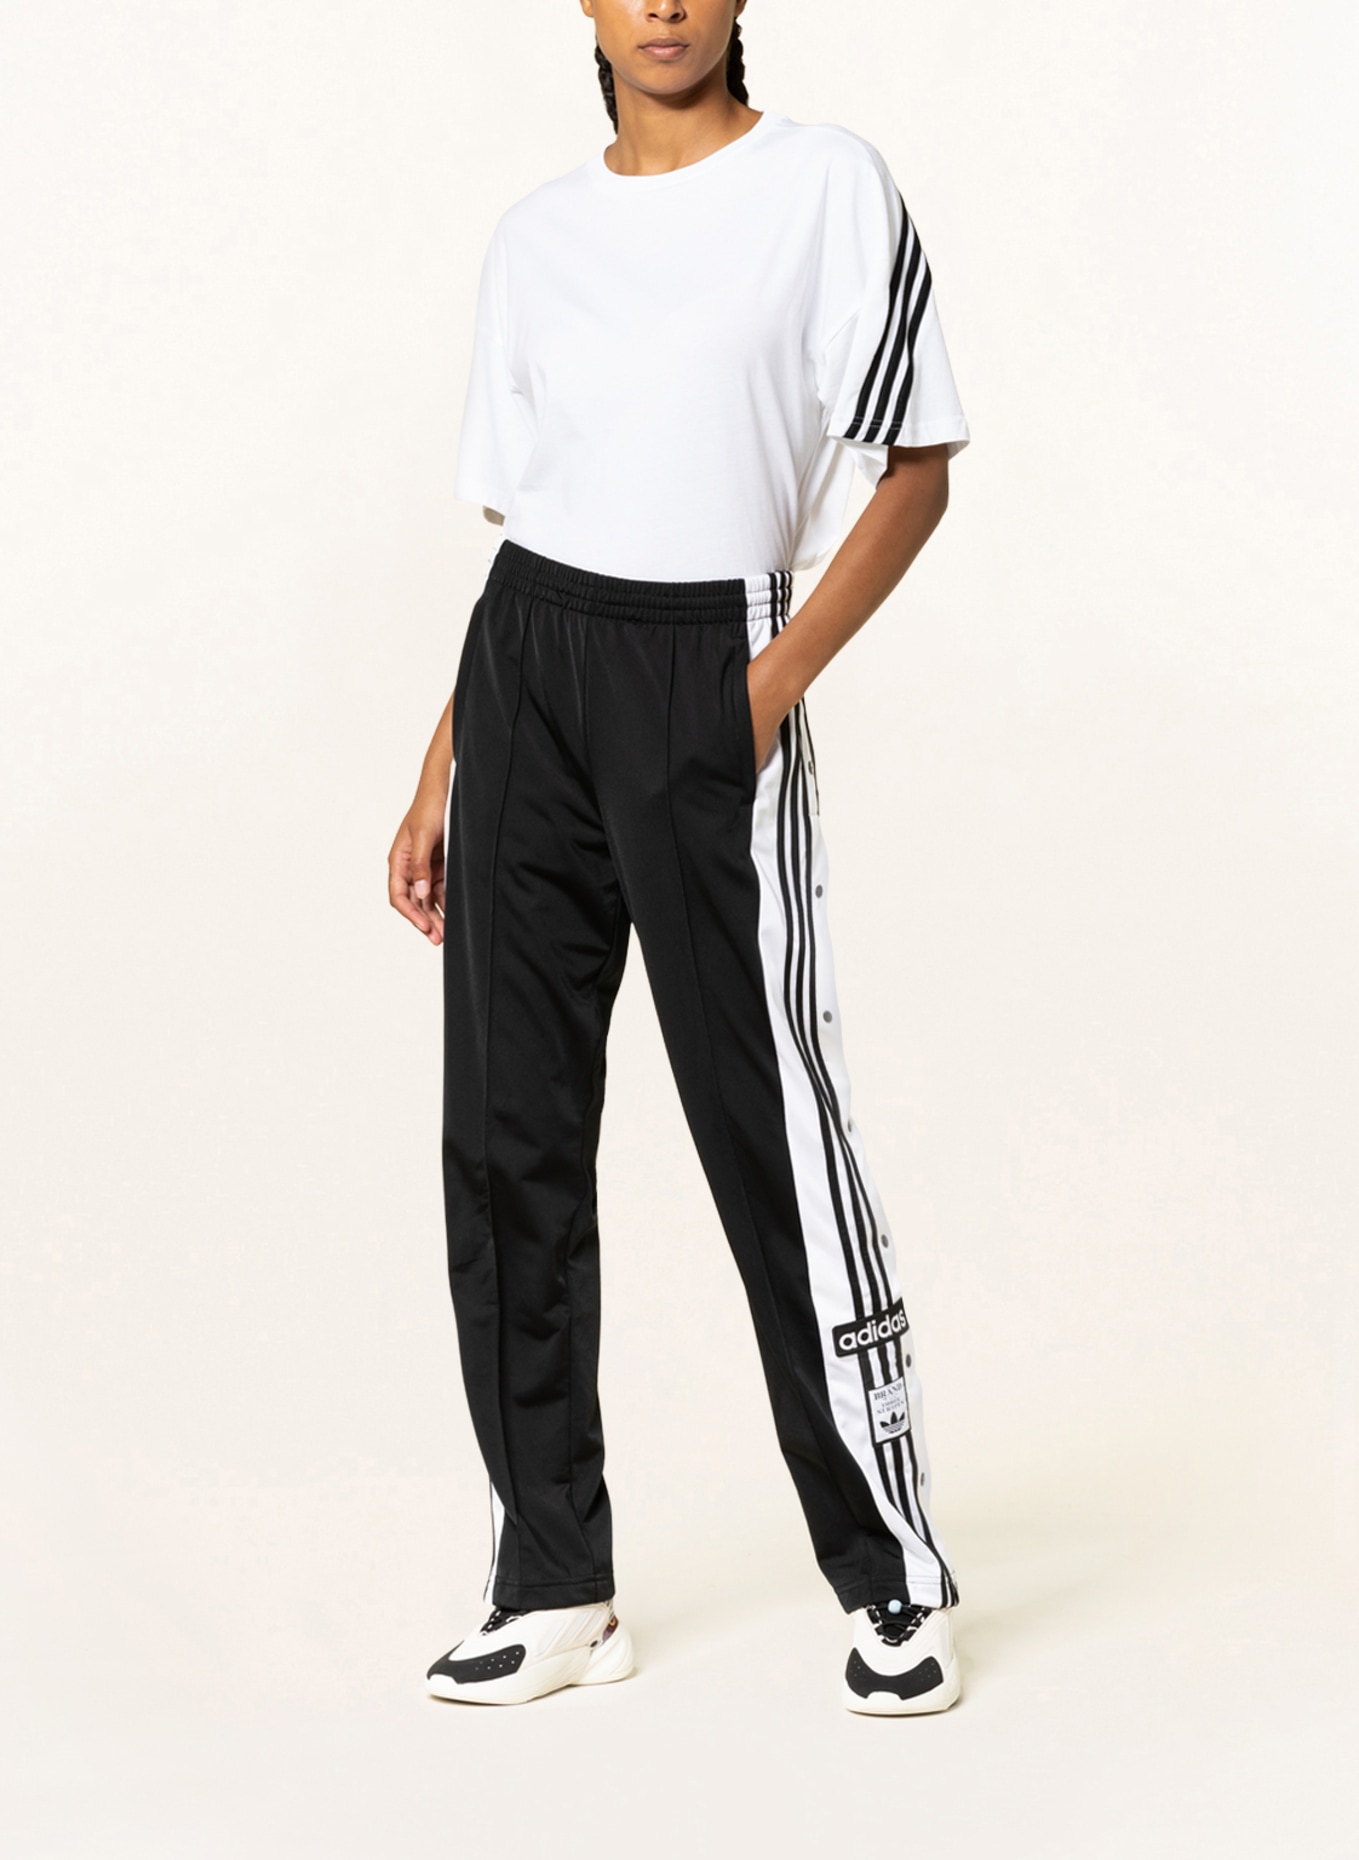 Brandnew ORIGINAL Adidas Prime Workout Pants Men's, Men's Fashion, Bottoms,  Joggers on Carousell